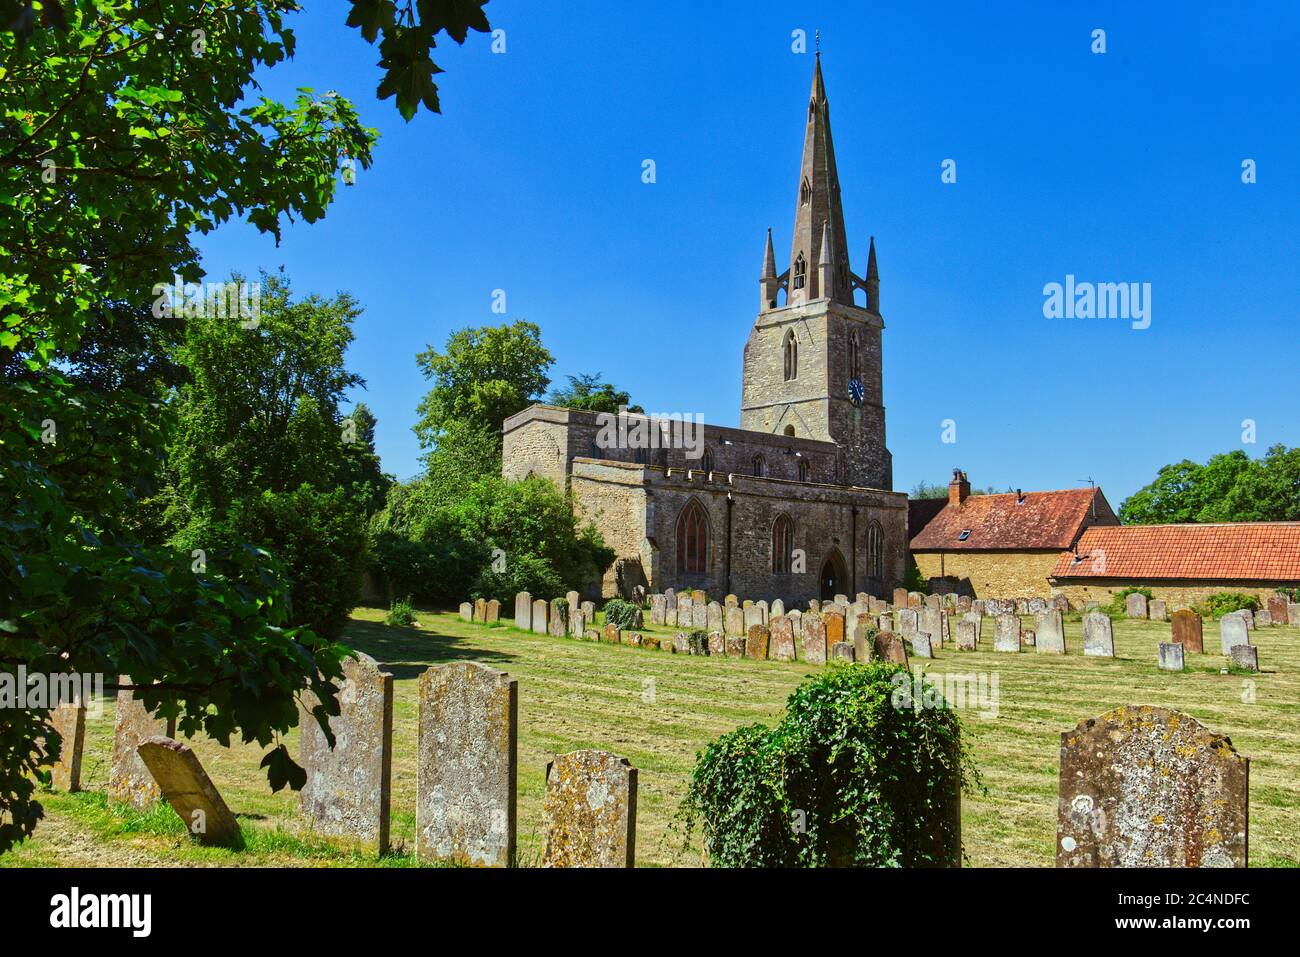 St Peter's Church, Harrold, Bedfordshire, UK Stock Photo